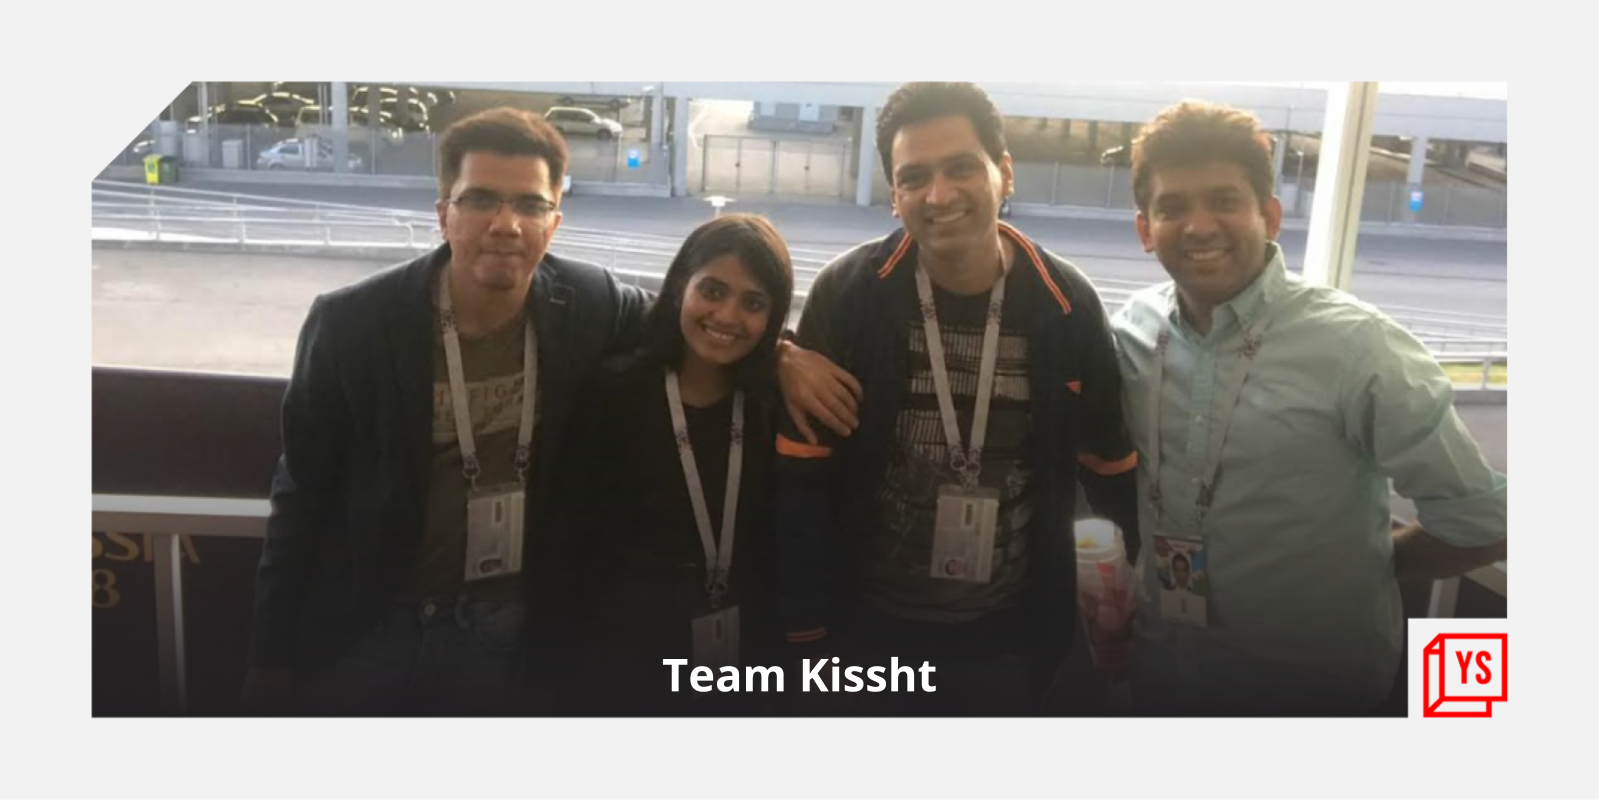 [Funding alert] Fintech startup Kissht raises $80M, launches millennial-focused offering